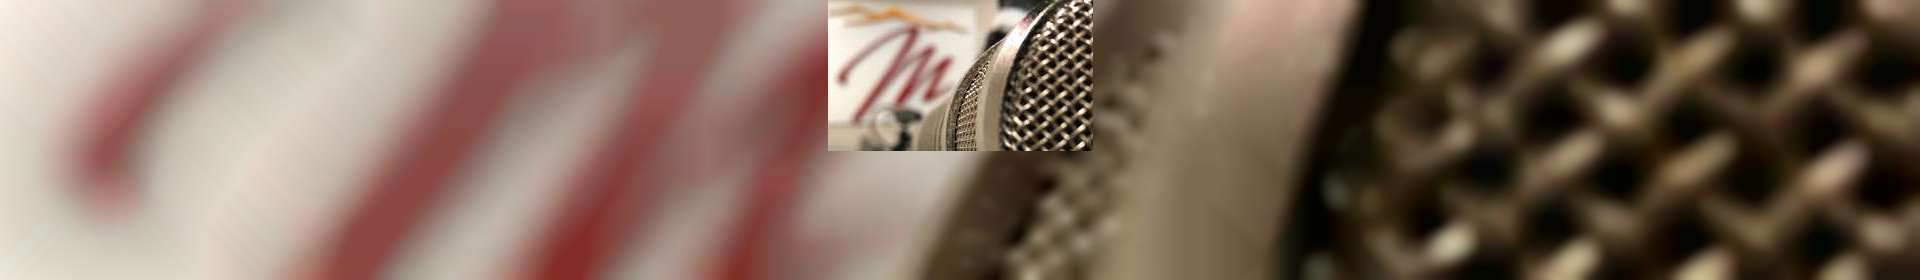 Entrevistas Rádio Maanaim: Grupo Semente Preciosa